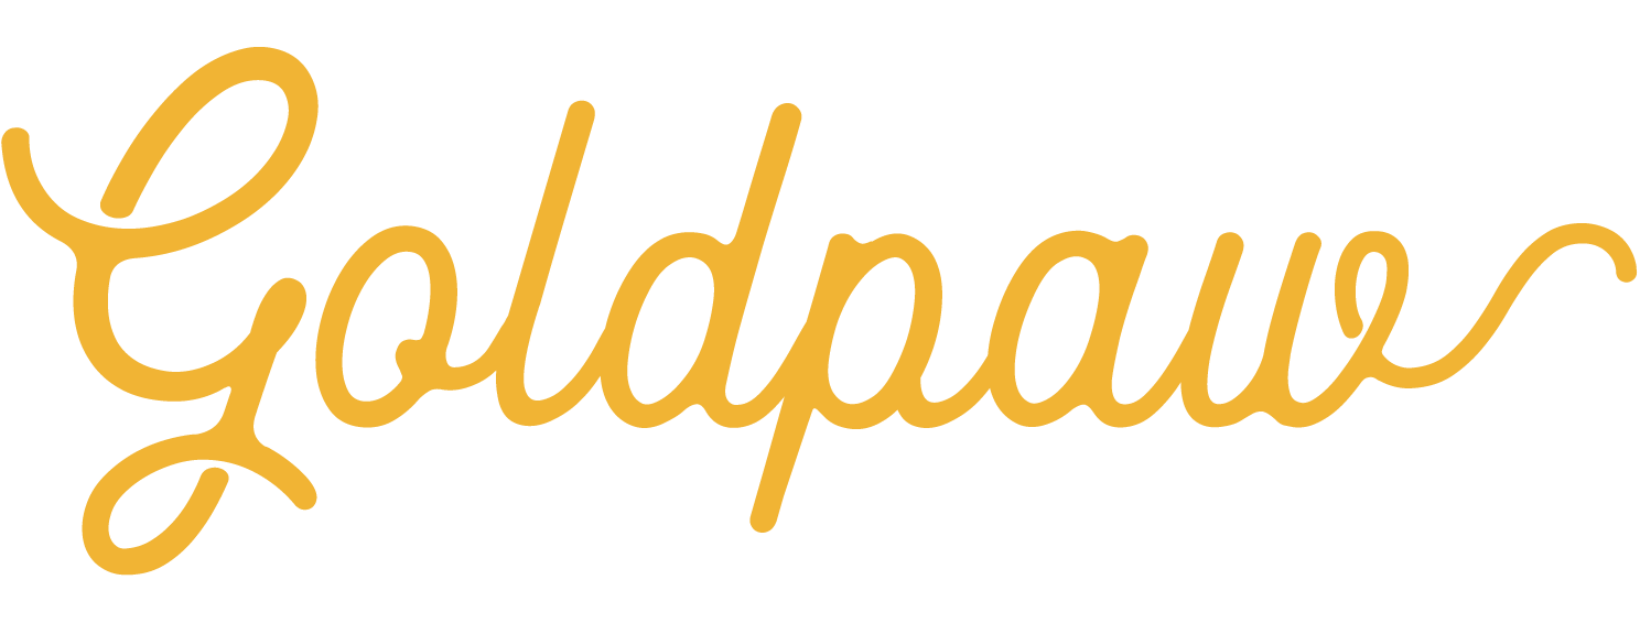 Goldpaw logo